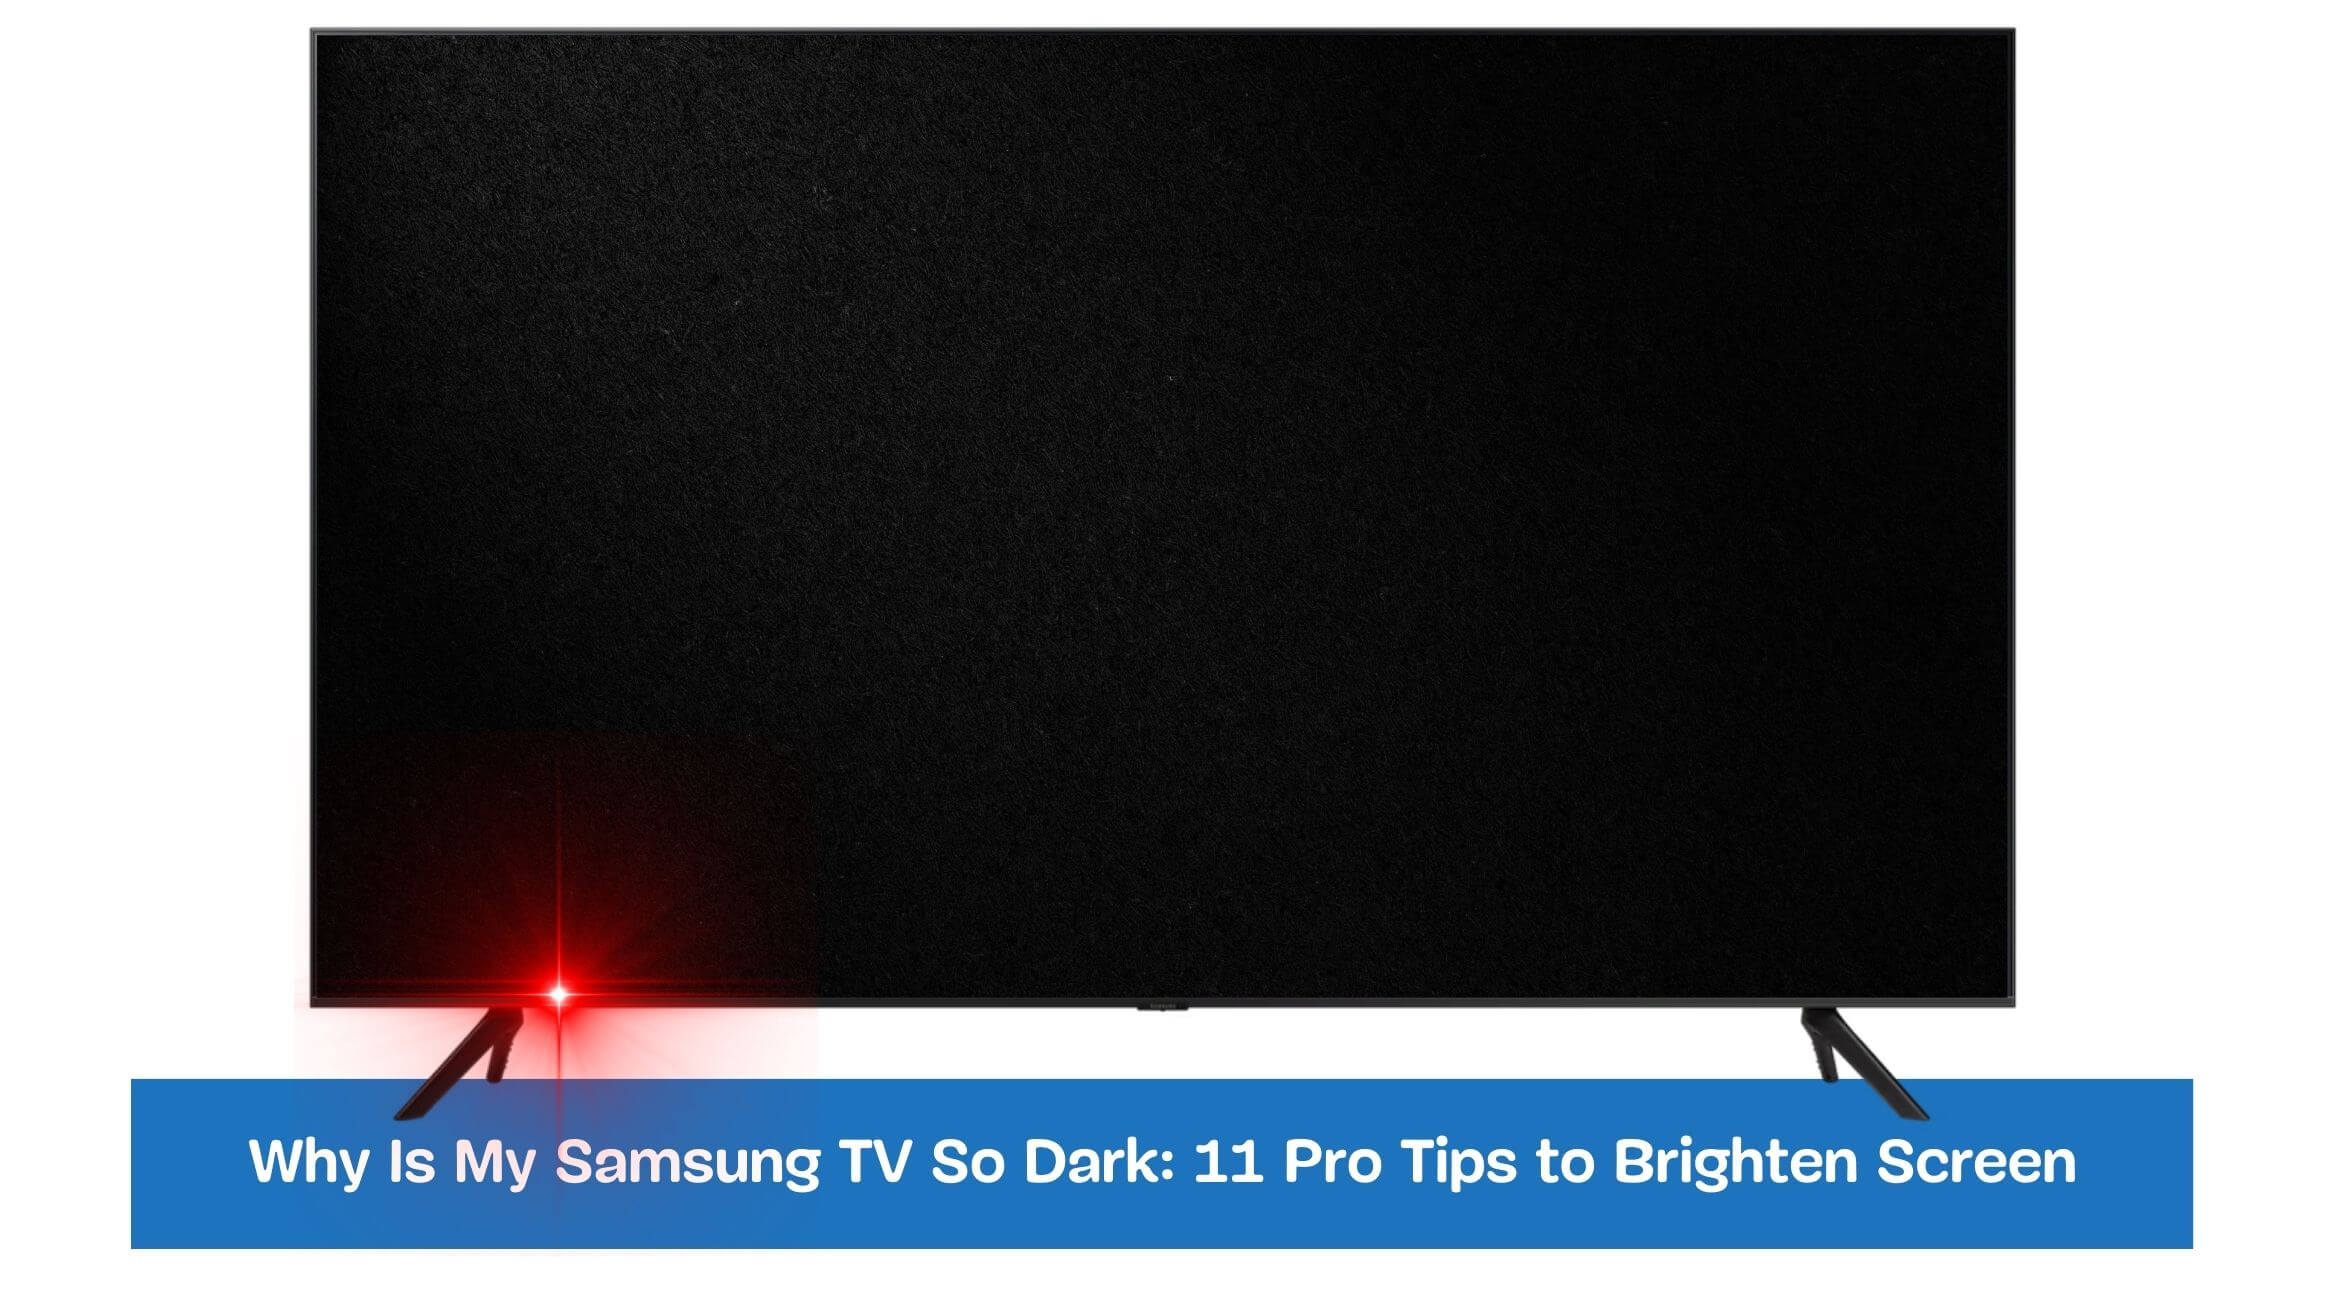 Why Is My Samsung TV So Dark: 11 Pro Tips to Brighten Screen